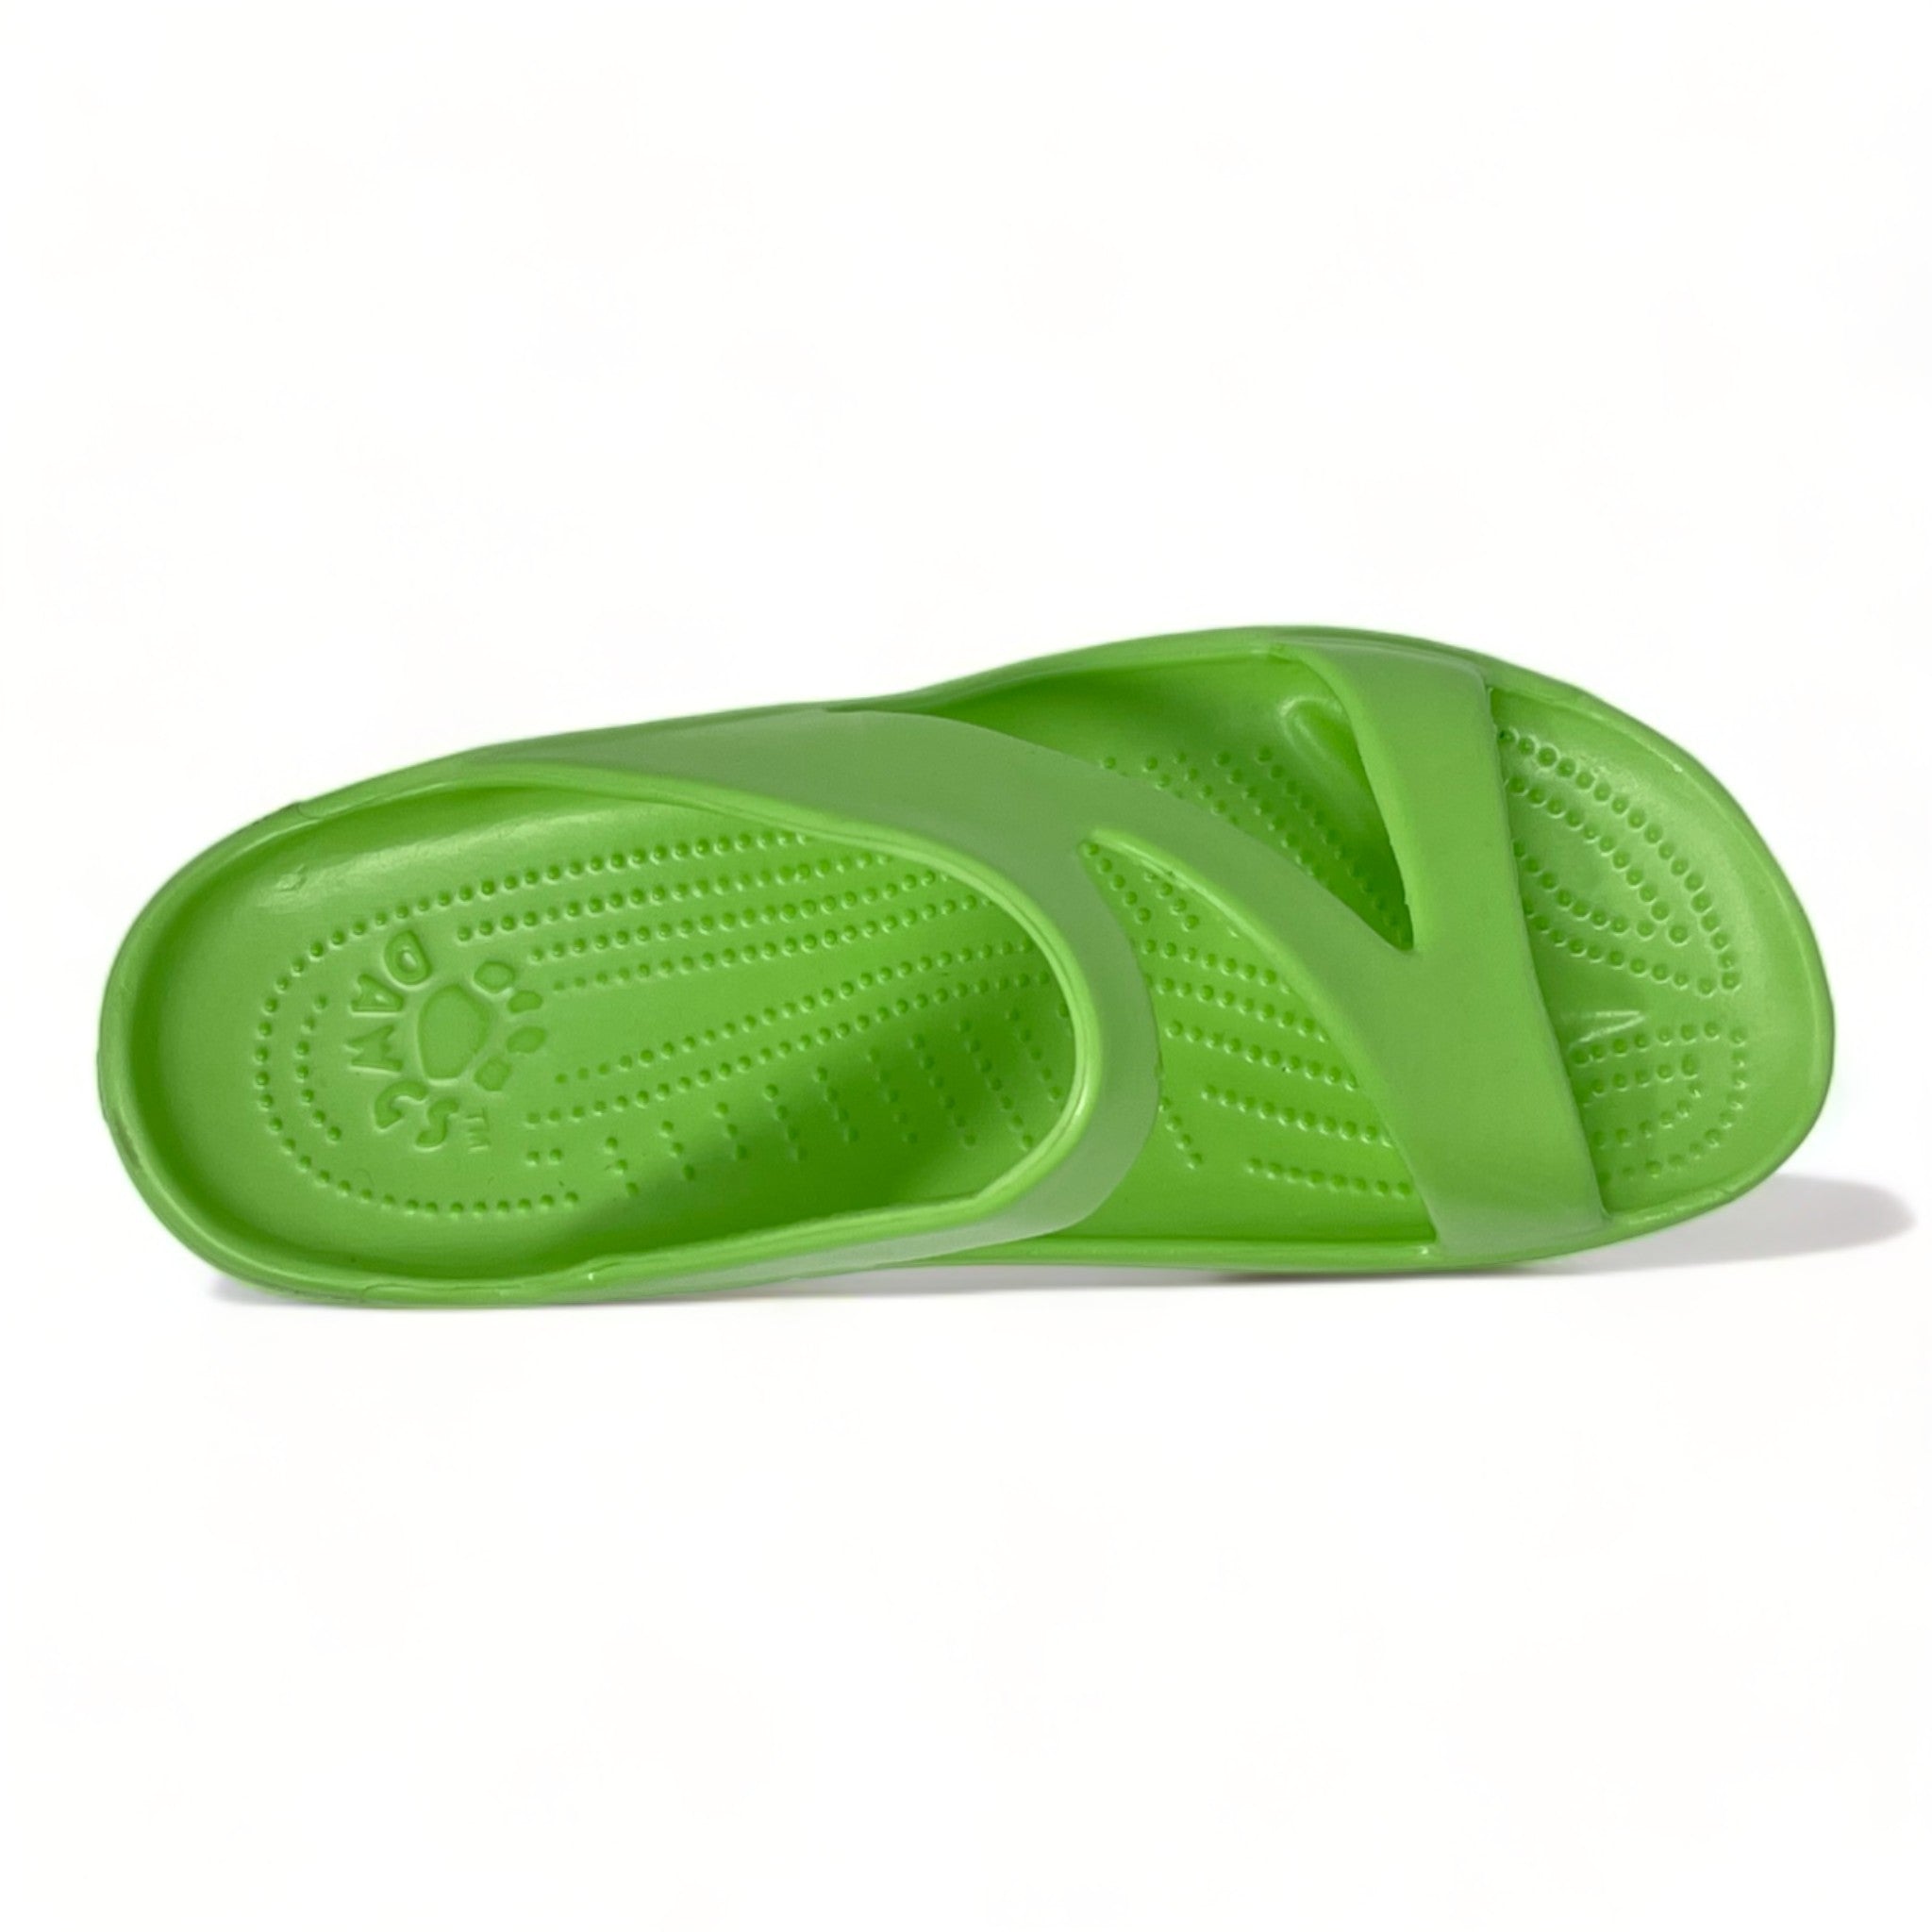 Nike Slides Sandals Neon Green Men Size 10 | eBay